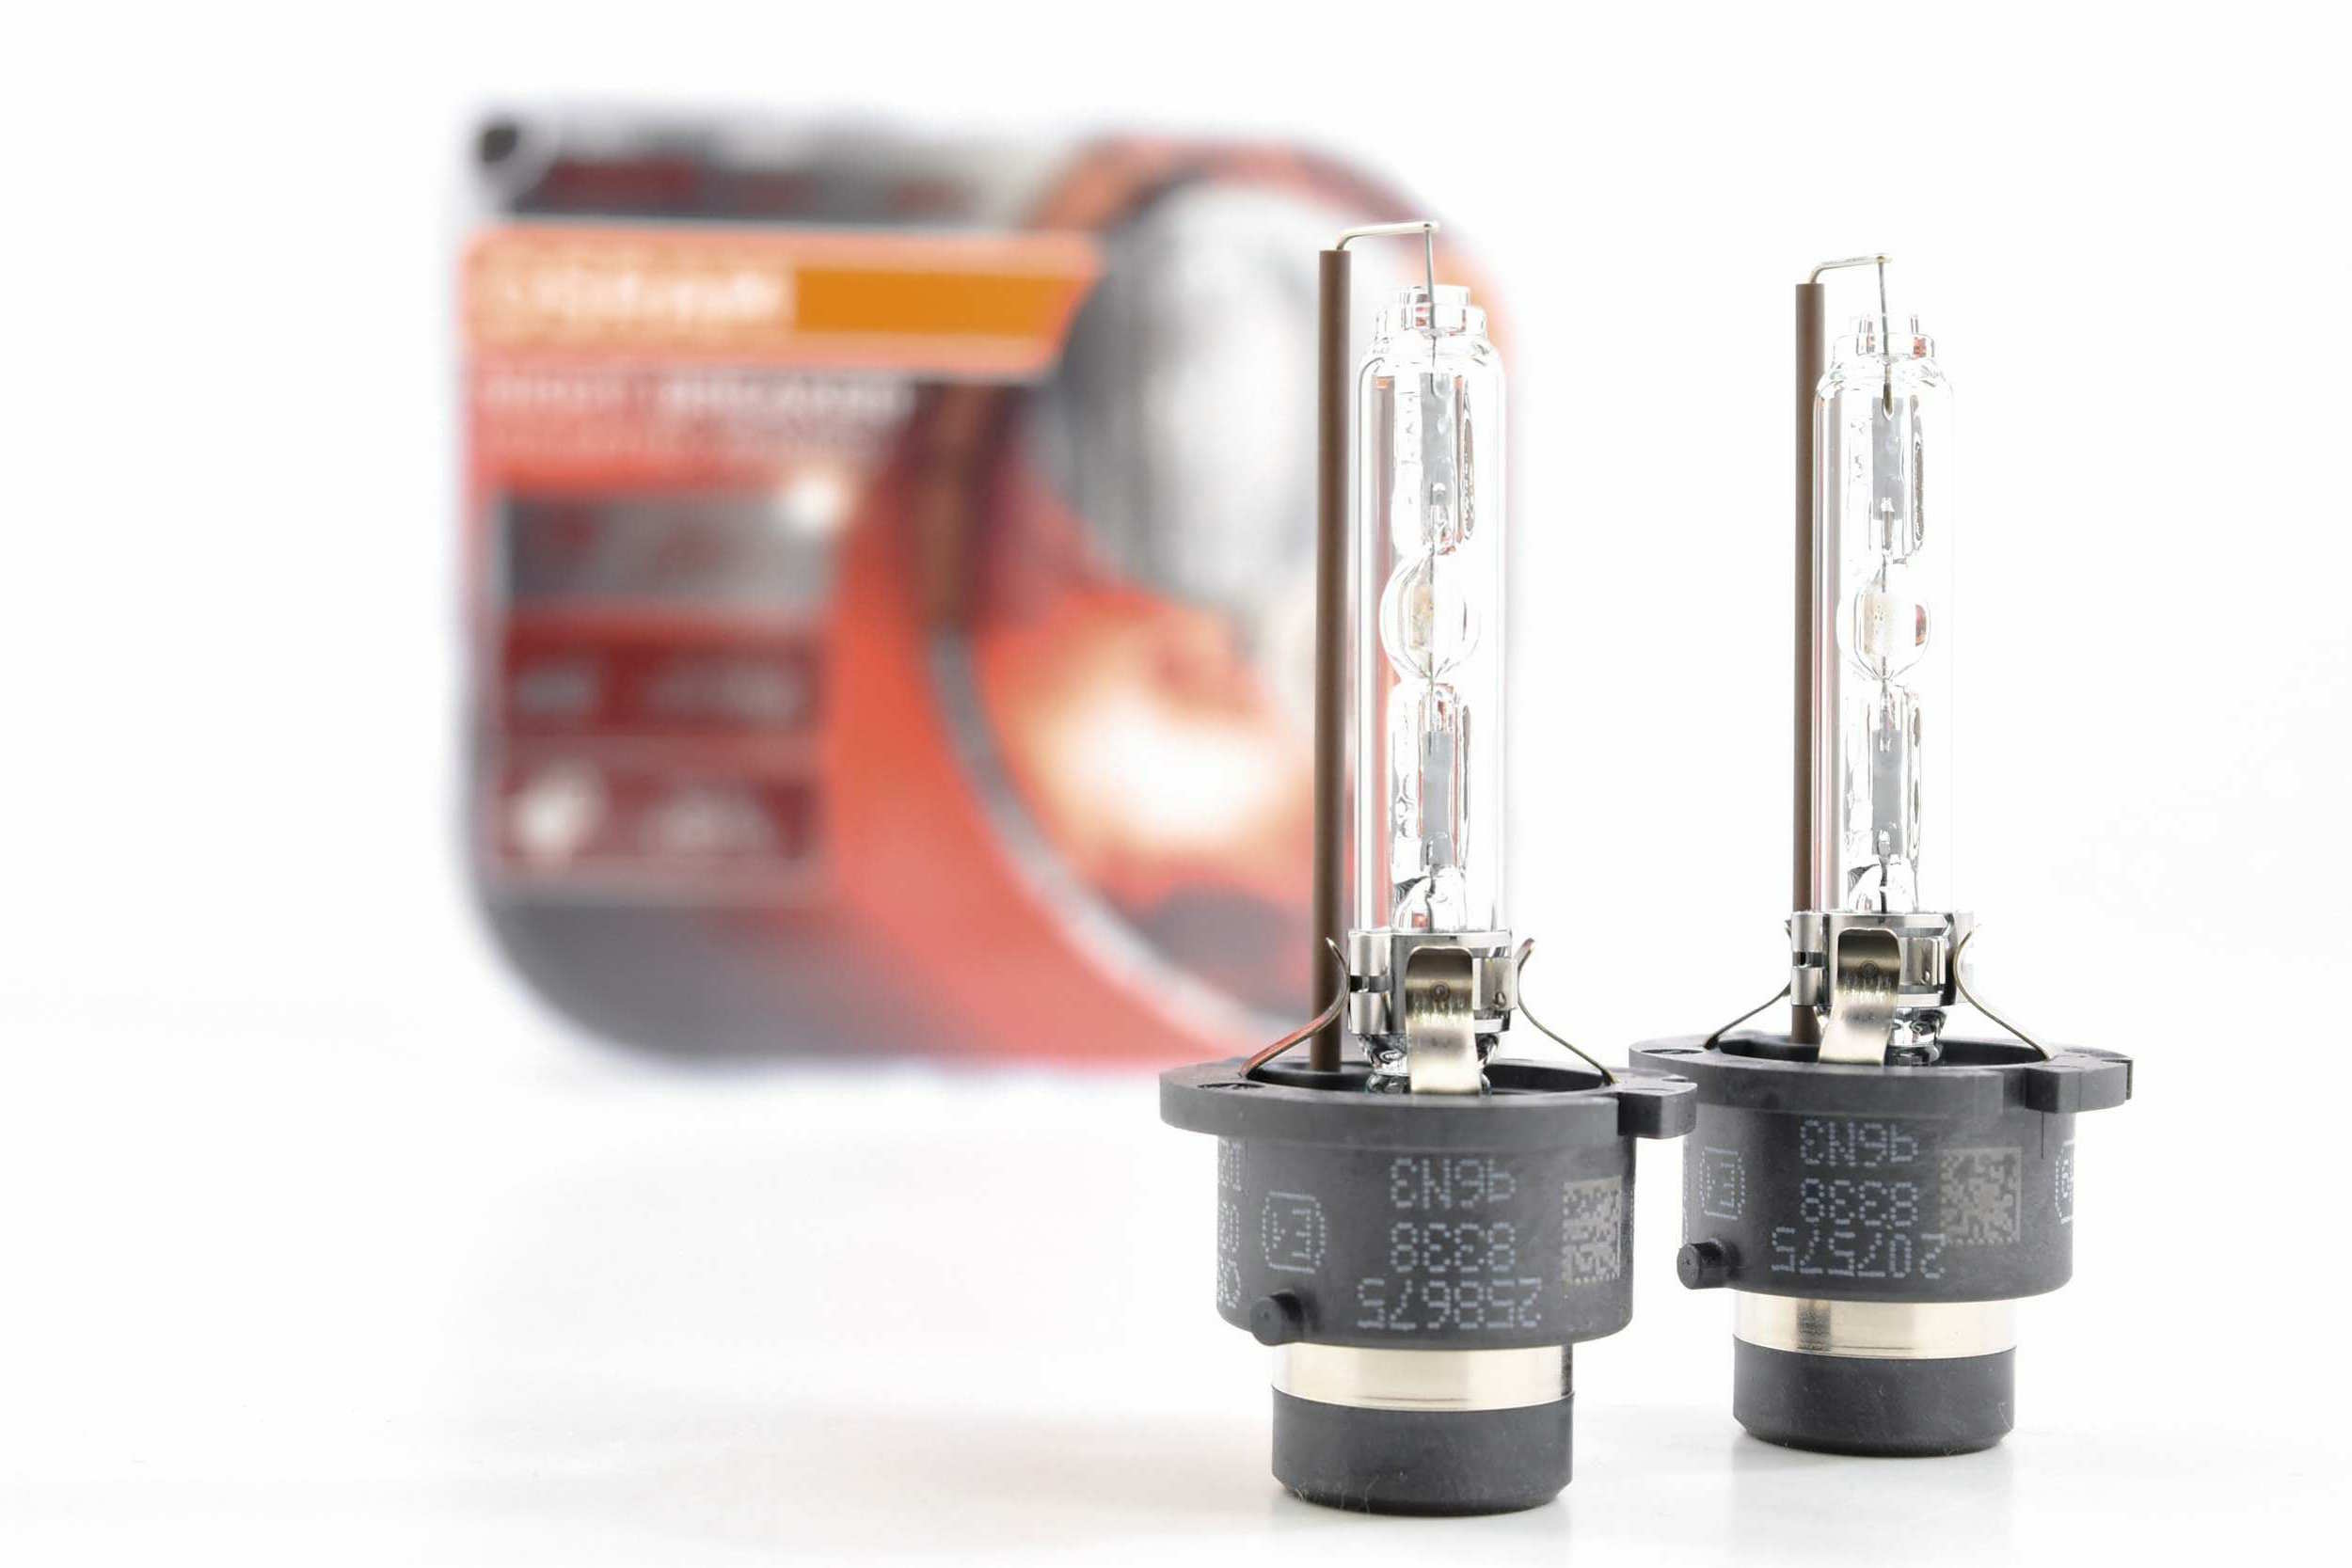 OSRAM Xenarc Night Breaker Laser D3S Xenon Headlight Bulbs (Twin) 220% –  Autosave Components